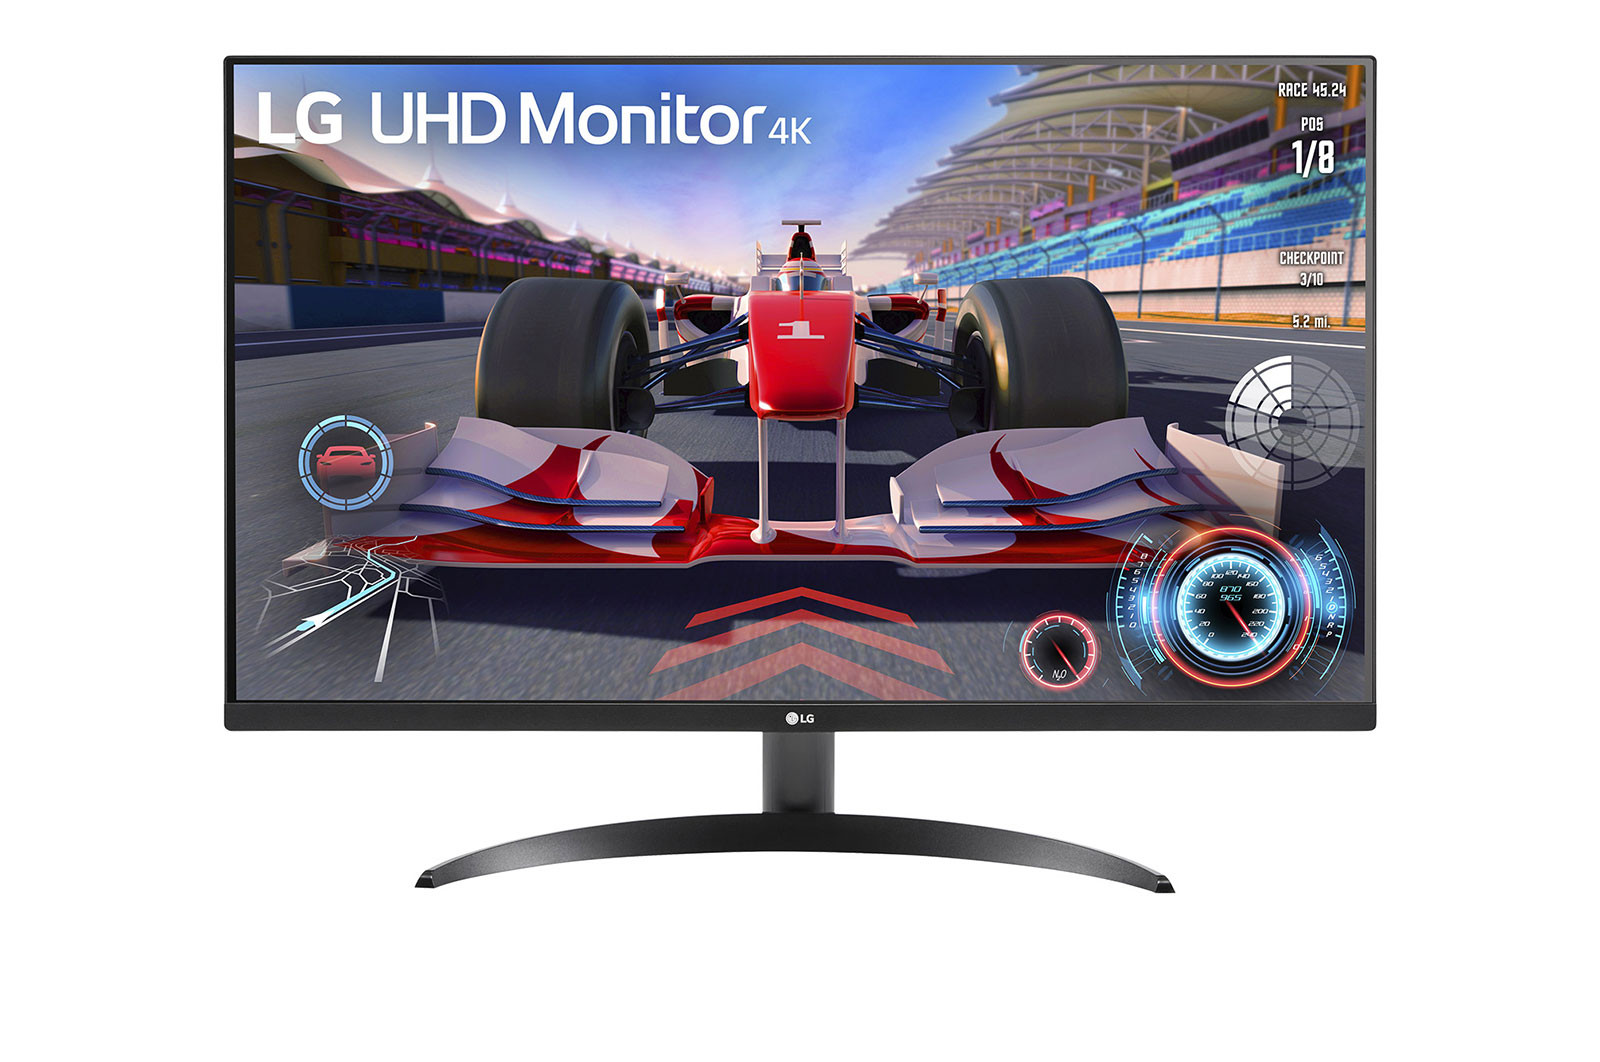 LG-32UR500-B-UHD-4K-HDR-Monitor-Demo